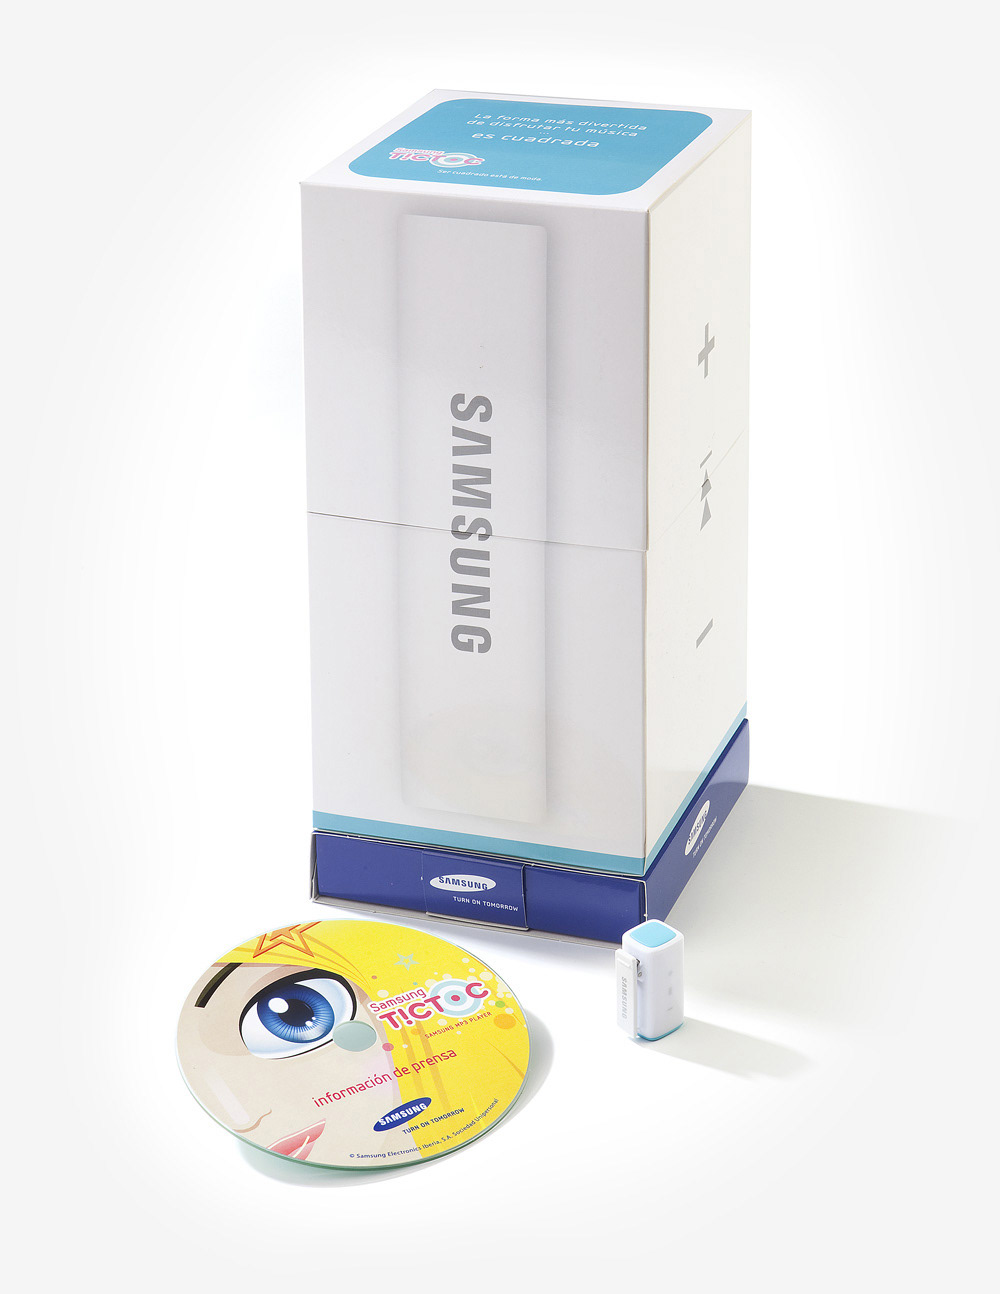 Samsung presskit Packaging graphic design  ILLUSTRATION  art direction 